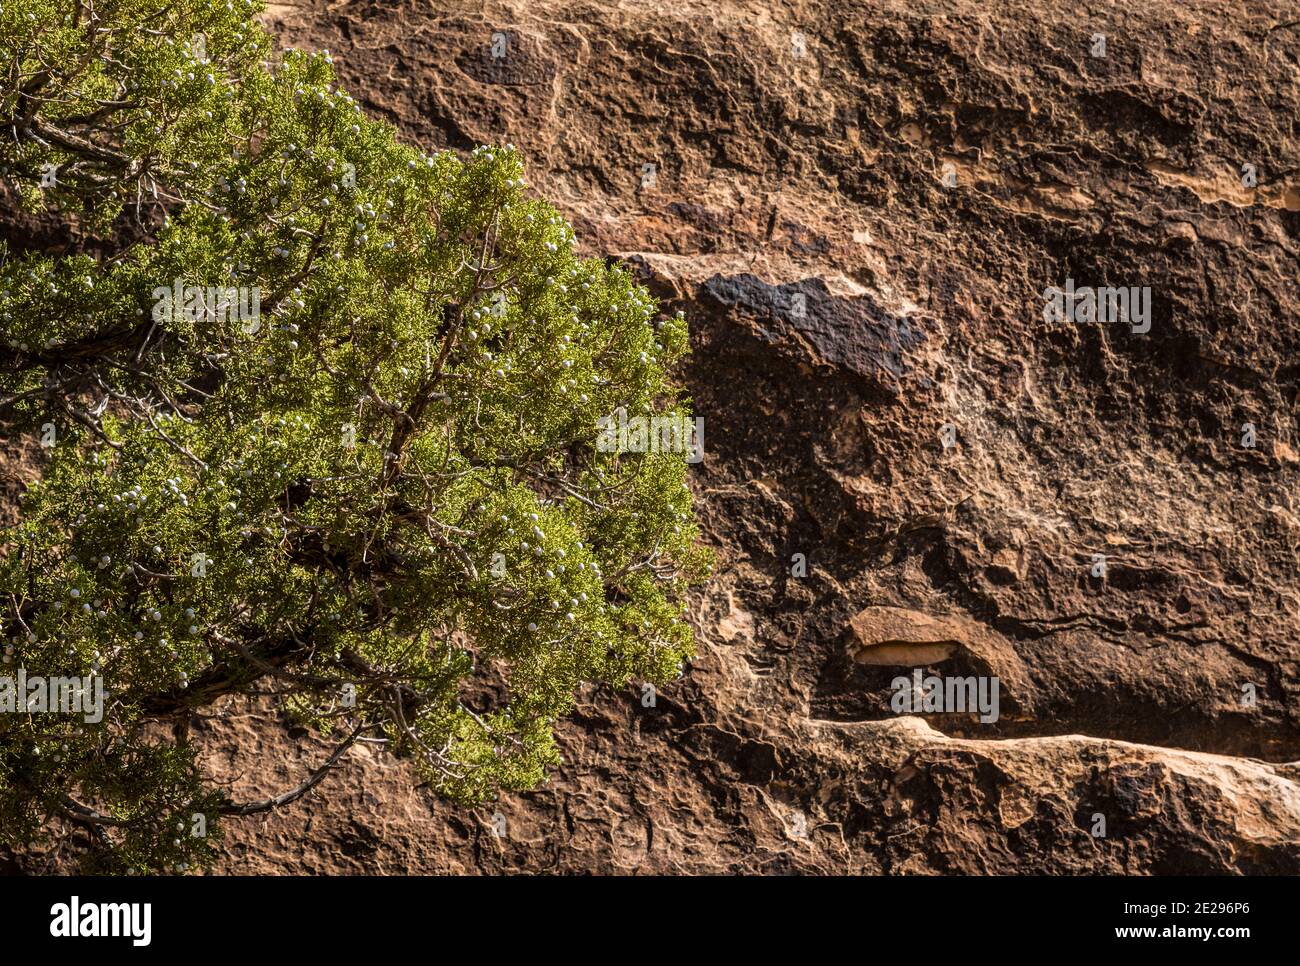 Juniper Tree et grès, parc national de Canyonlands, Utah, États-Unis. Banque D'Images